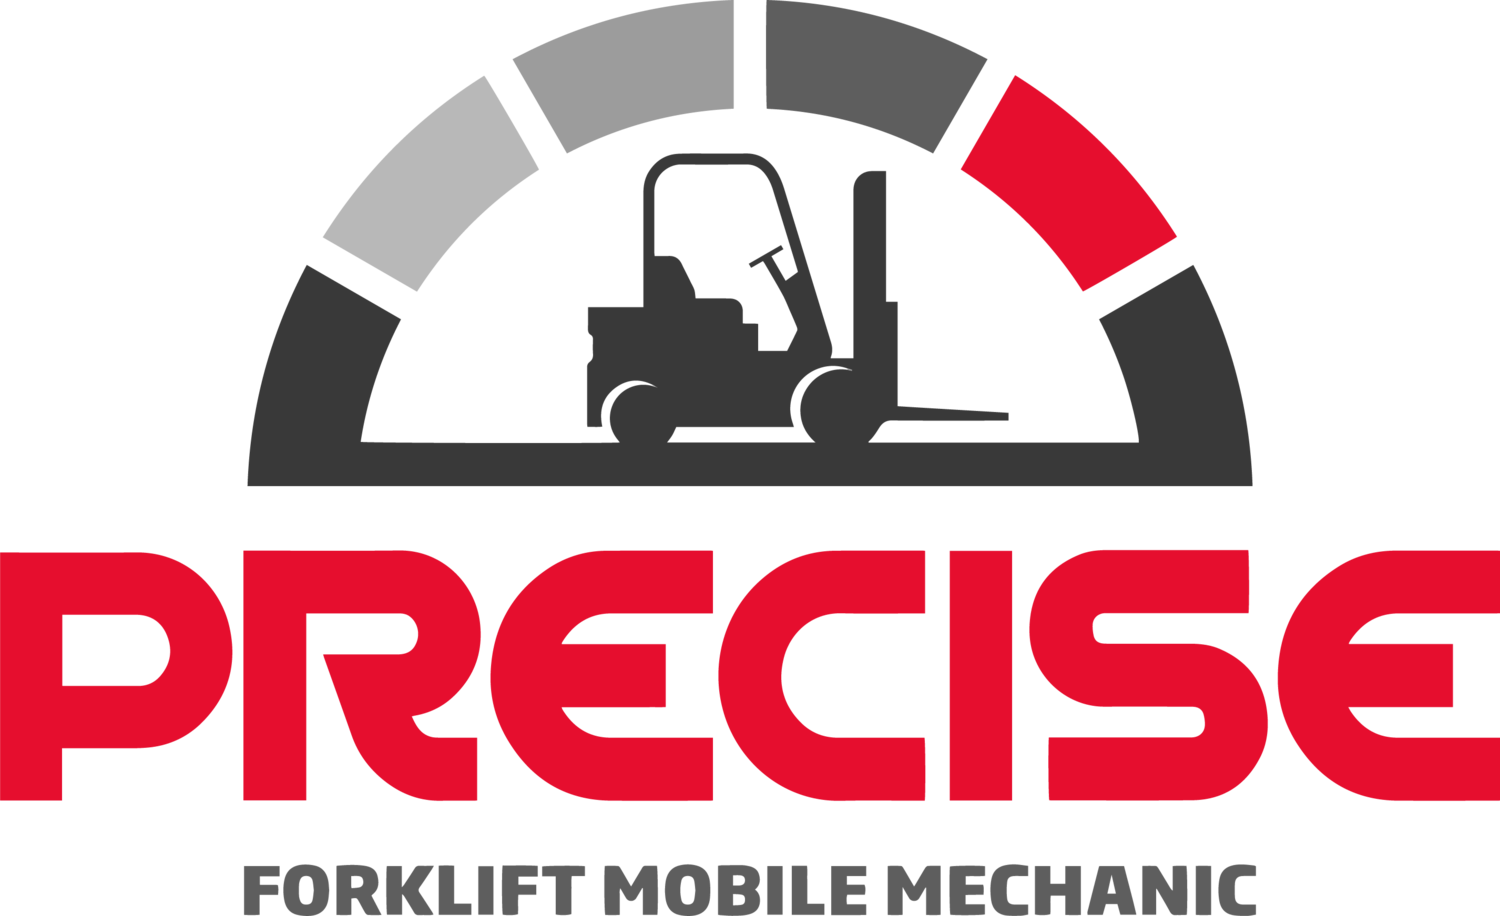 Precise Forklift Service & Repair